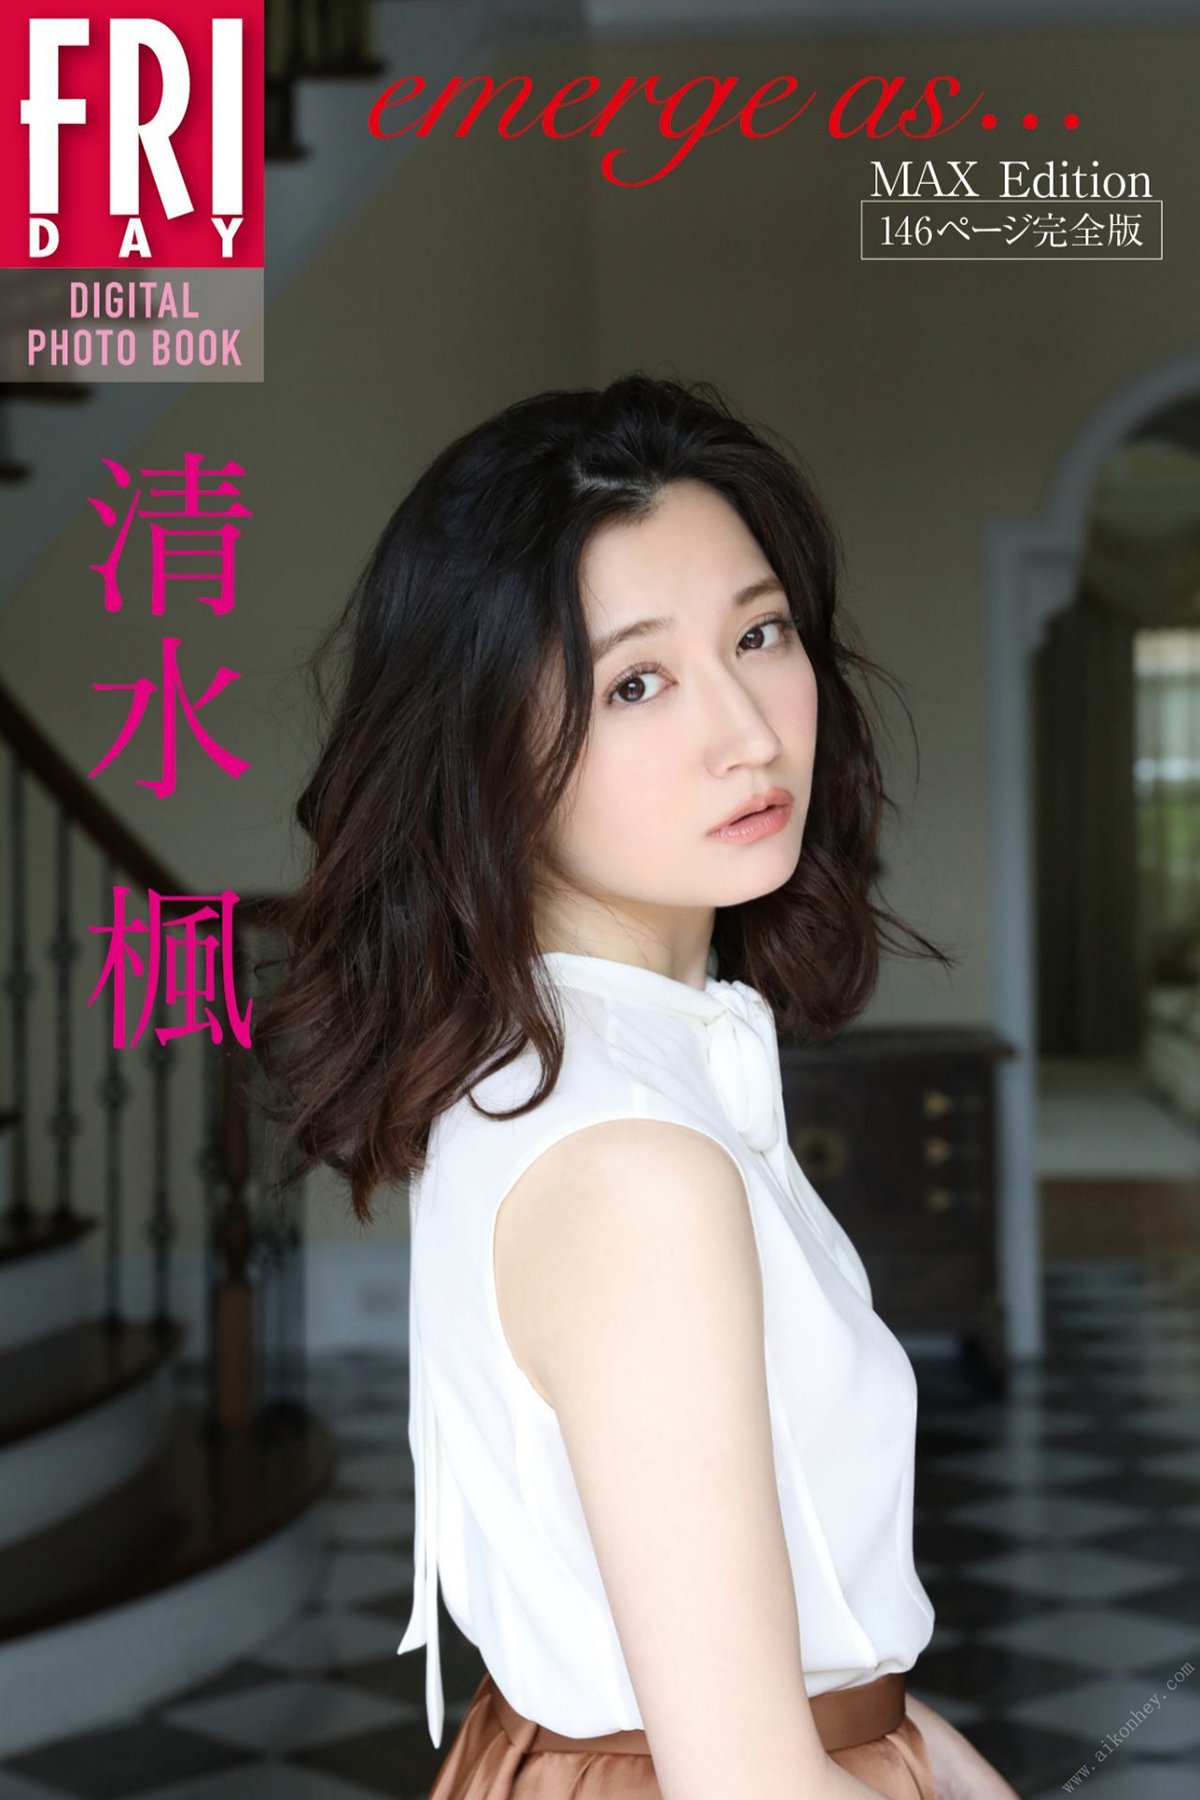 FRIDAY Digital Photobook Kaede Shimizu 清水楓 – emerge as.. MAX EDITION 2020-10-16